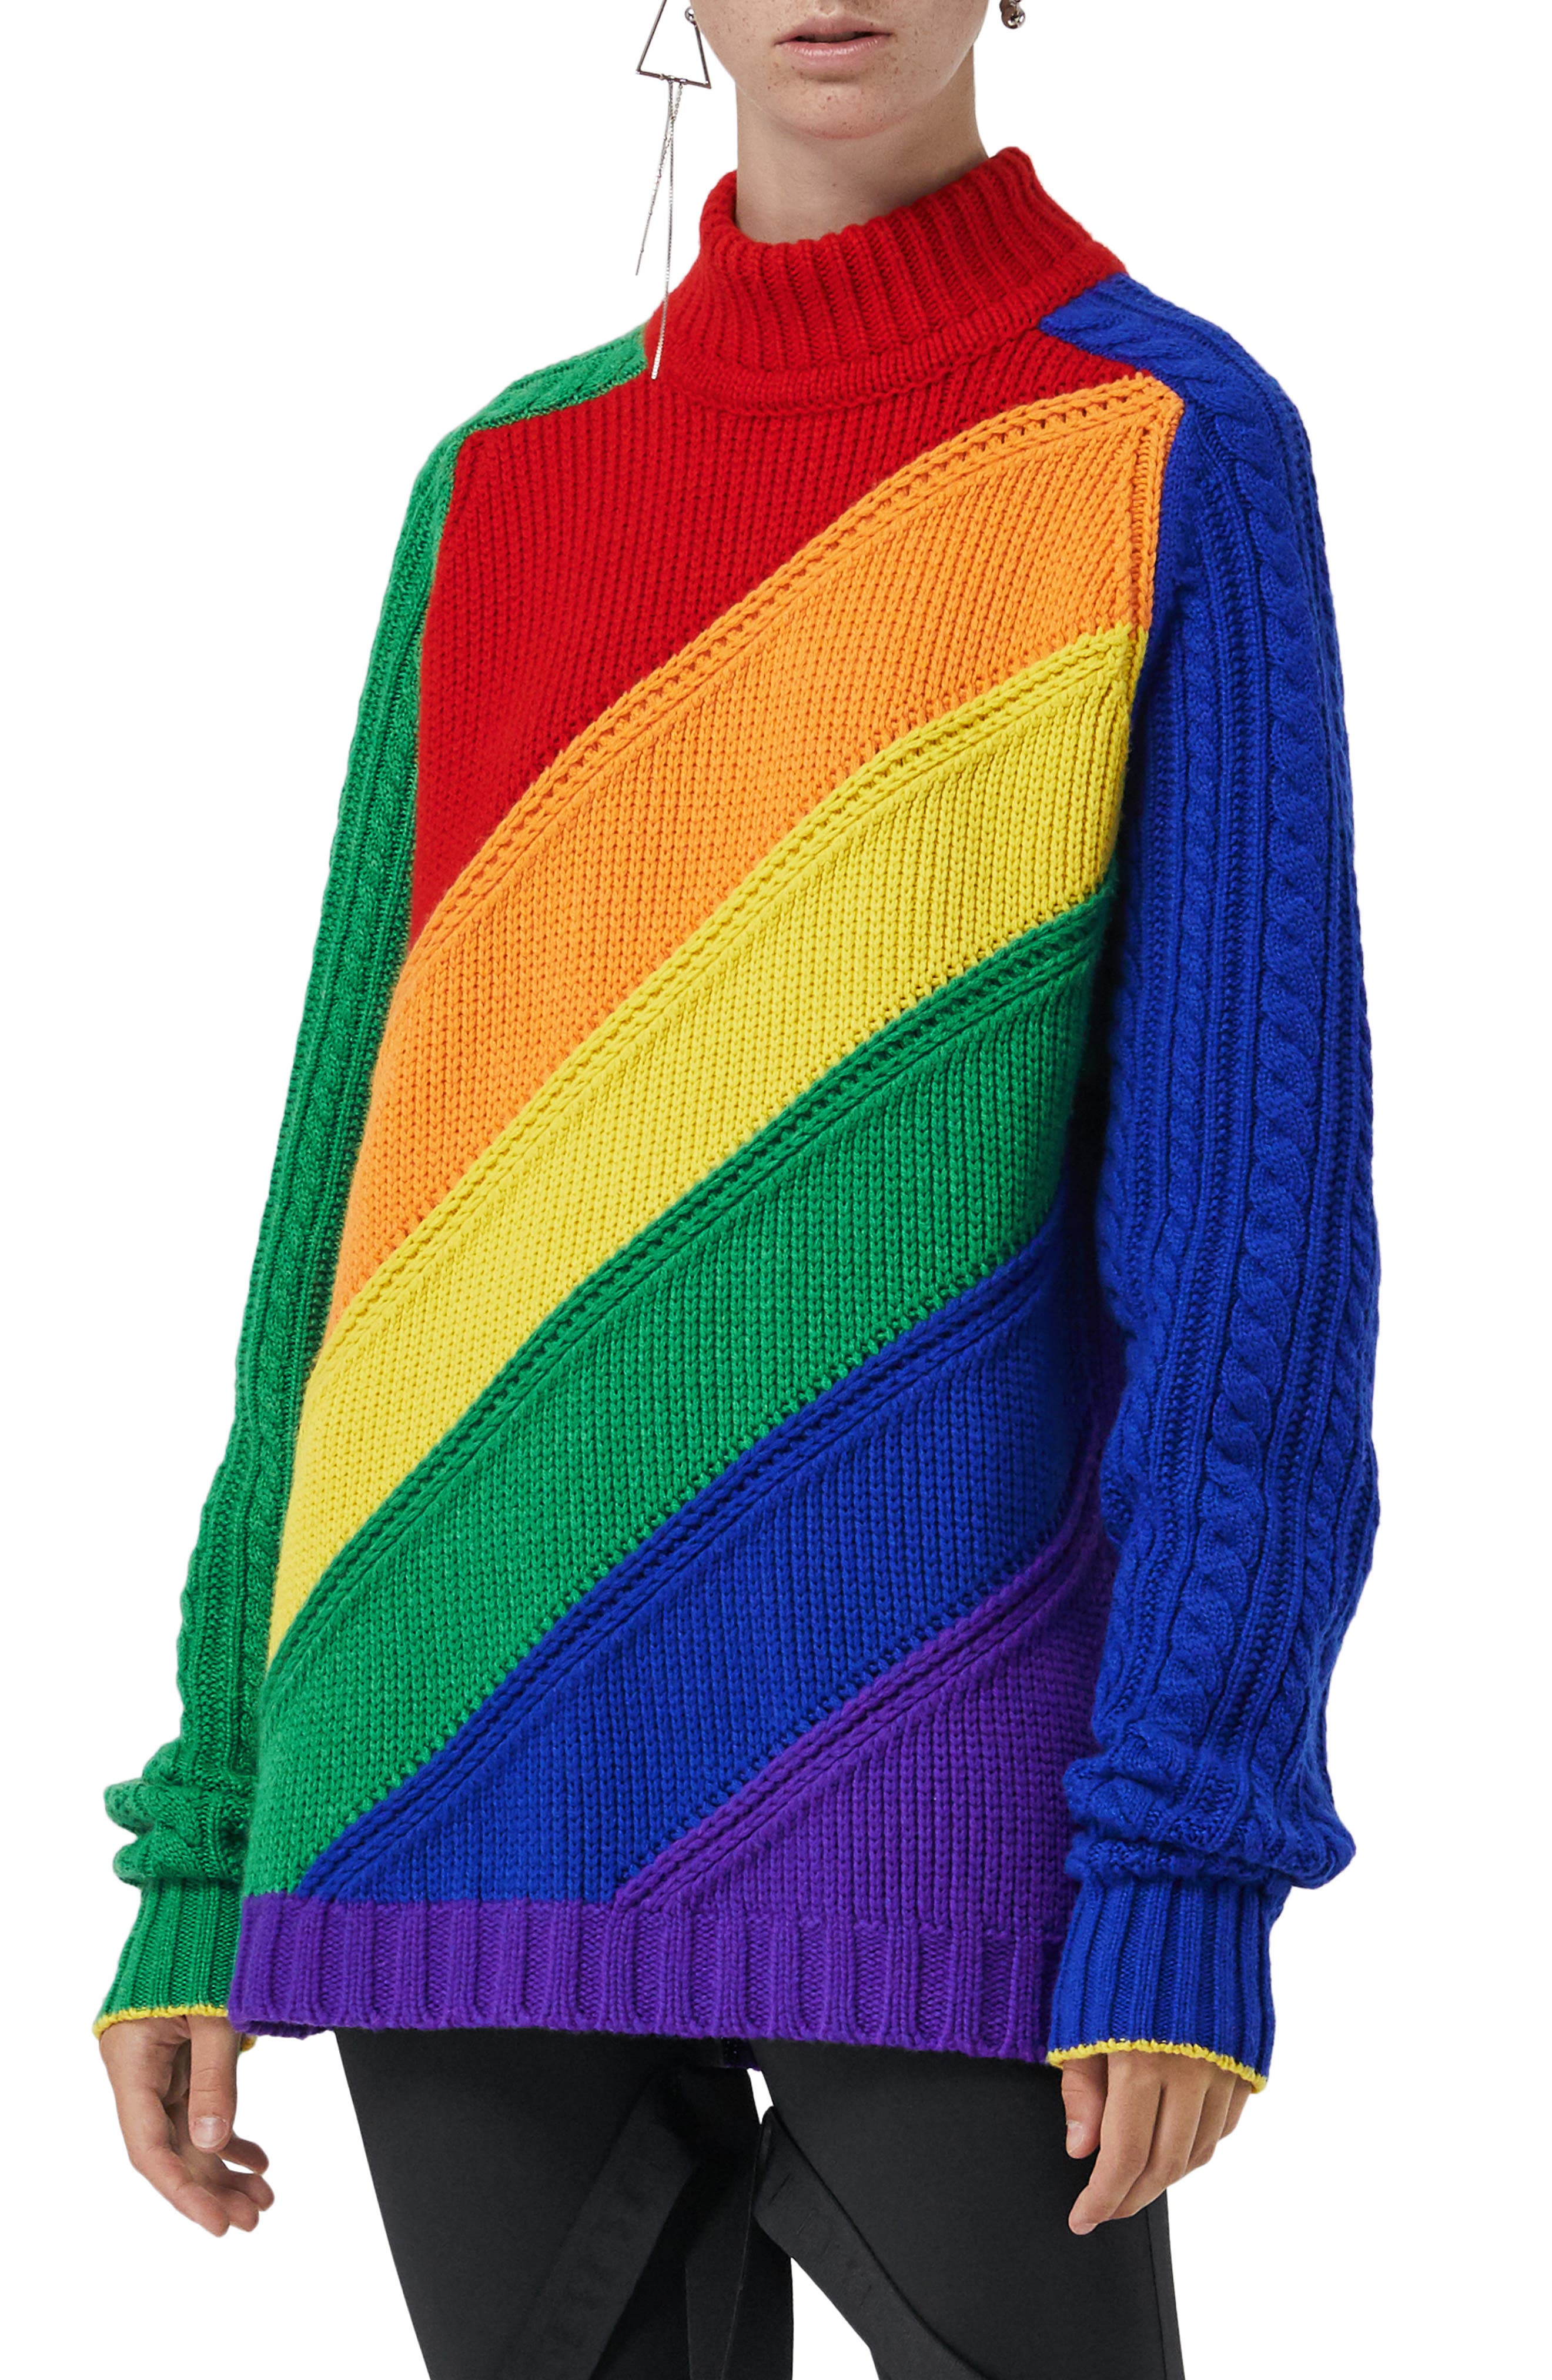 burberry jumper rainbow